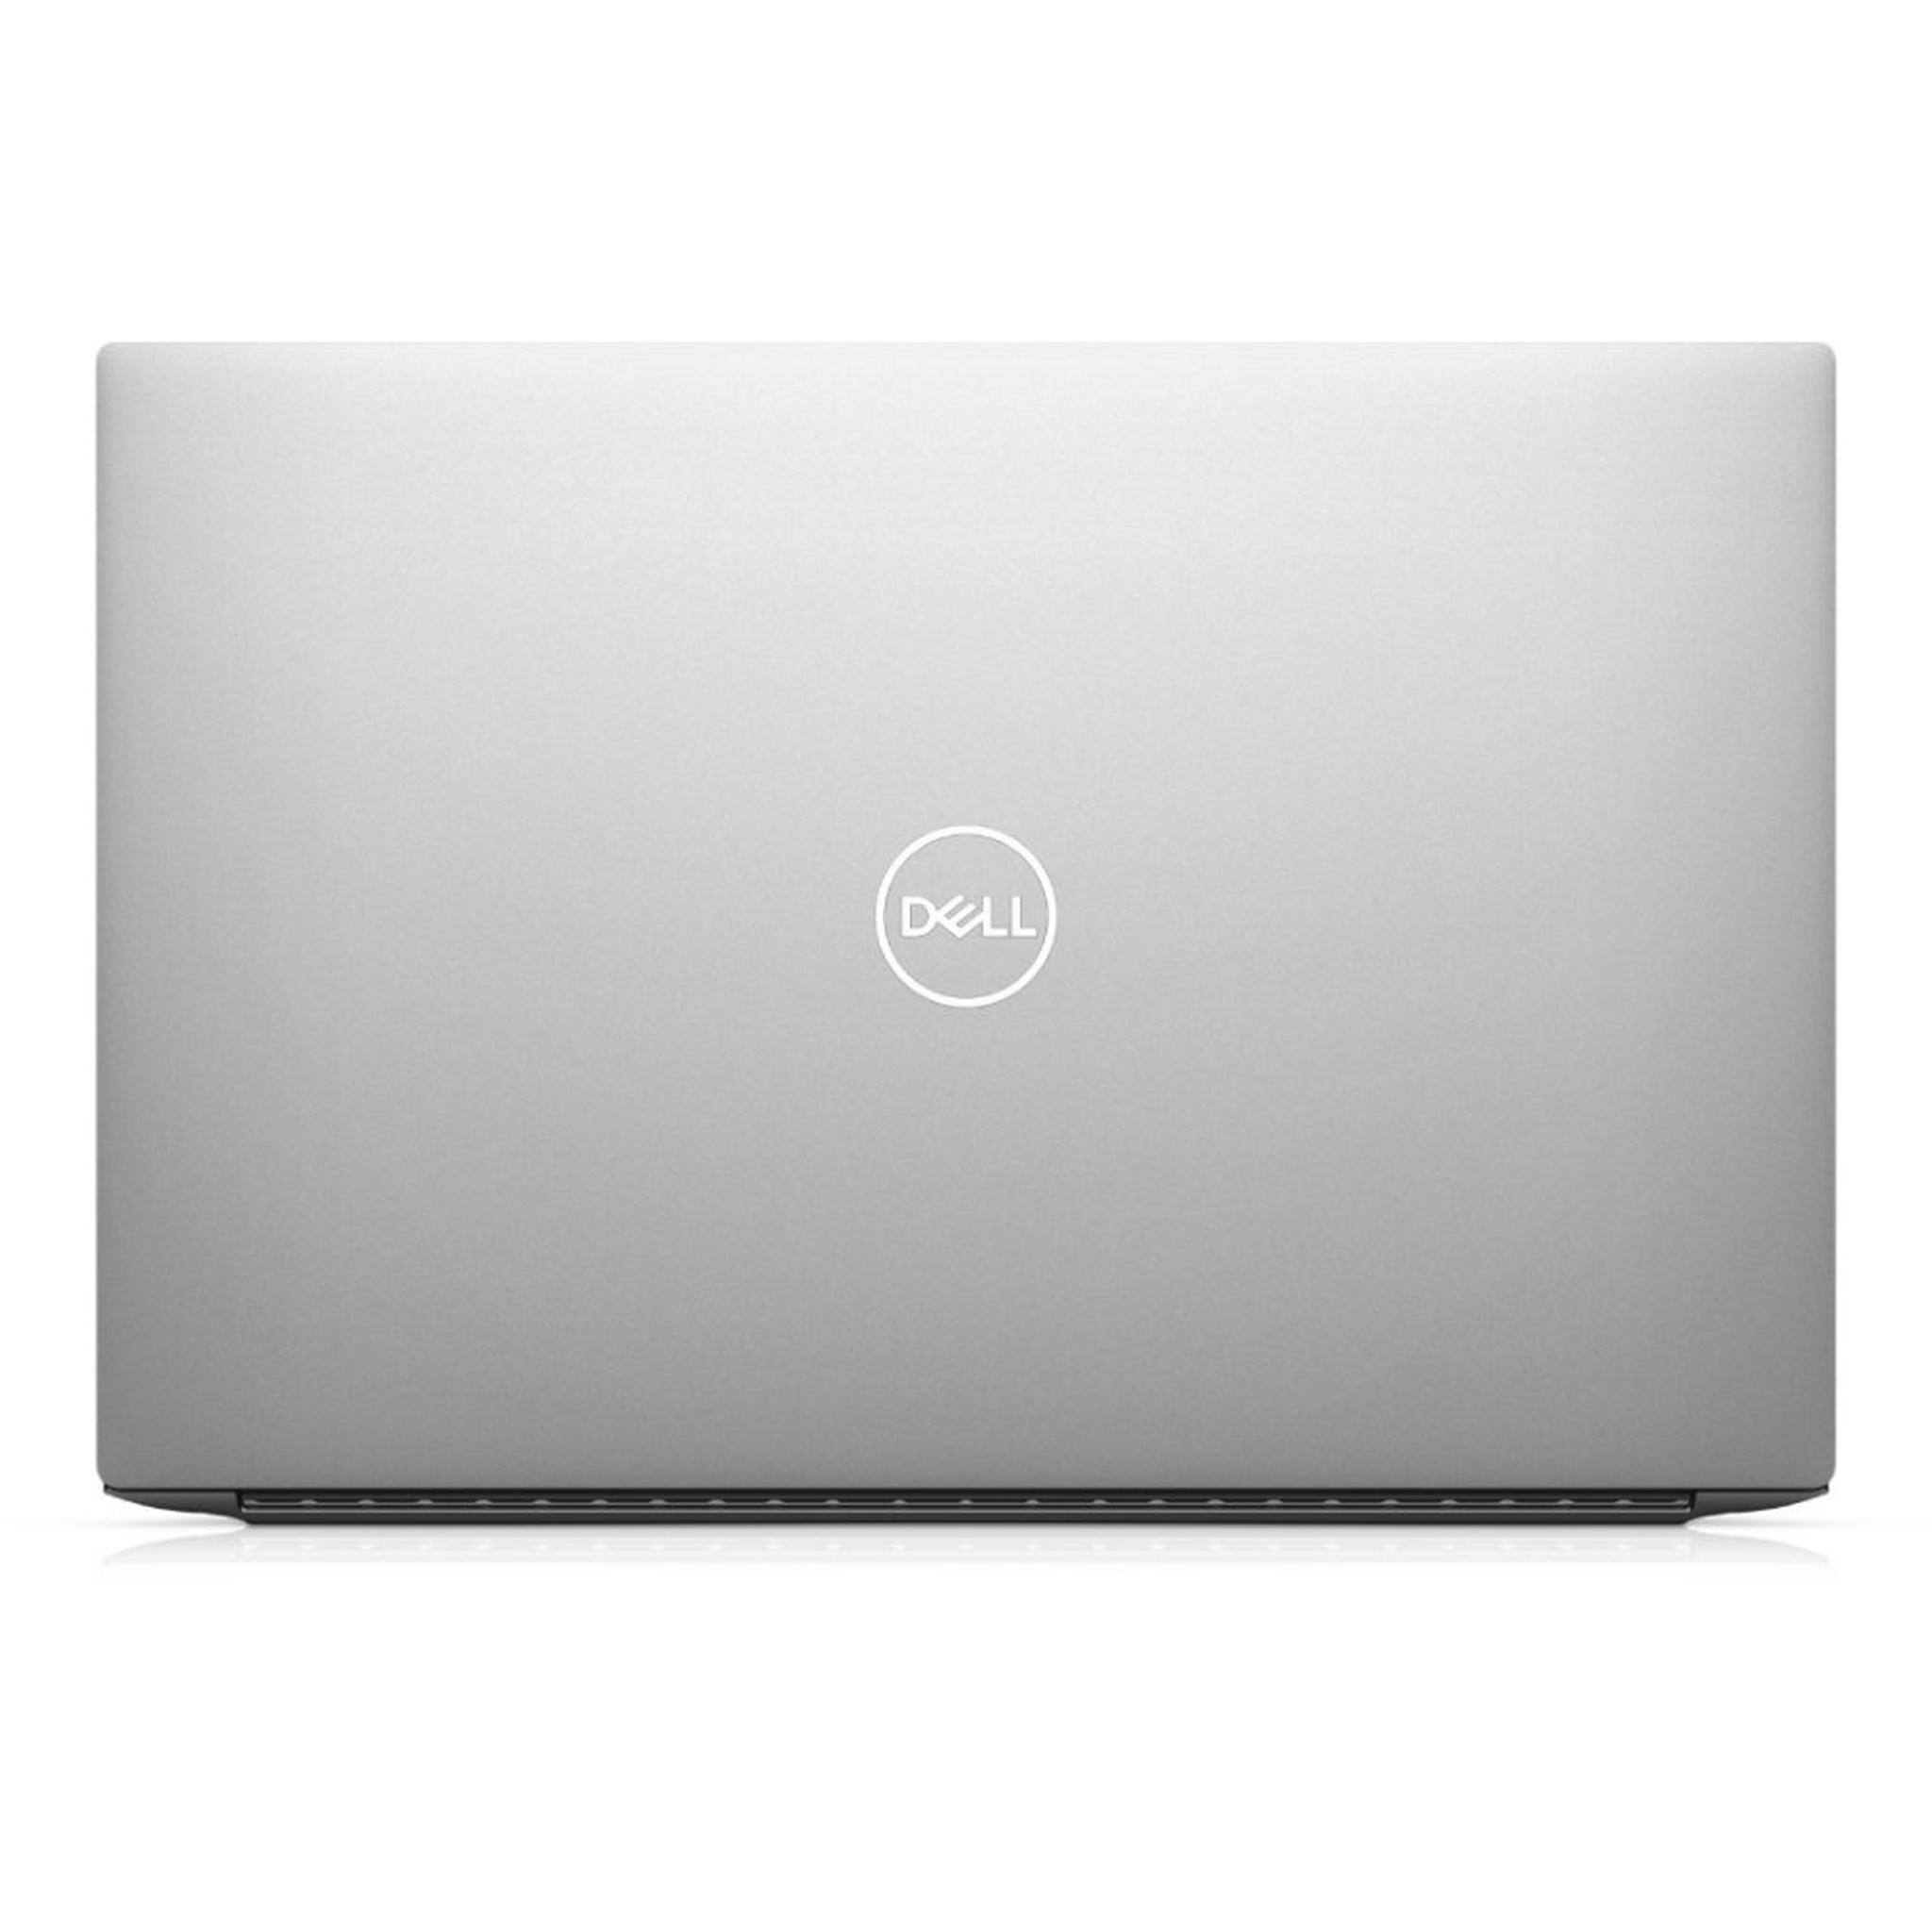 Dell XPS 15 Intel Core i9 12th Gen, 32GB RAM, 1TB SSD, 15.6-inch Laptop - Silver